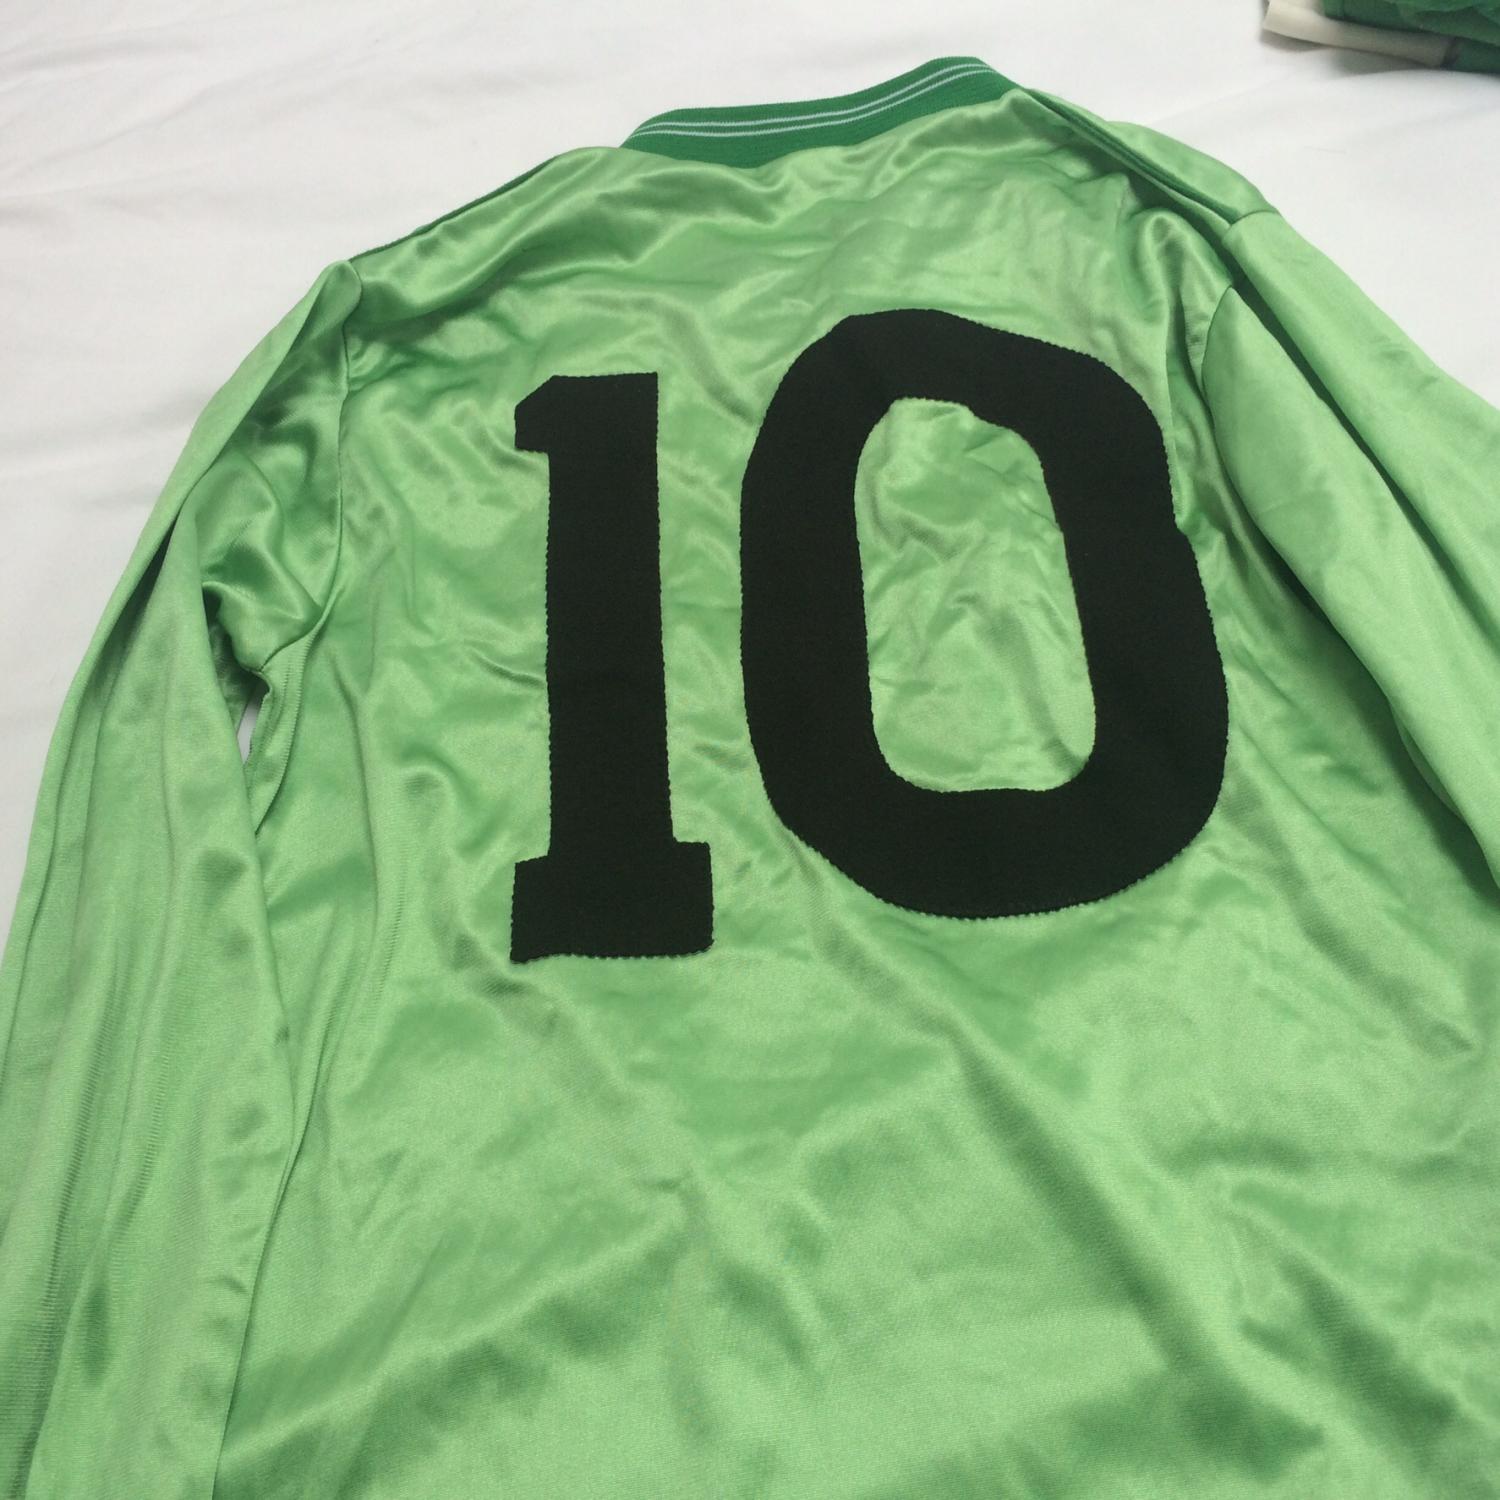 Celtic Away football shirt 1984 - 1986. Sponsored by CR Smith